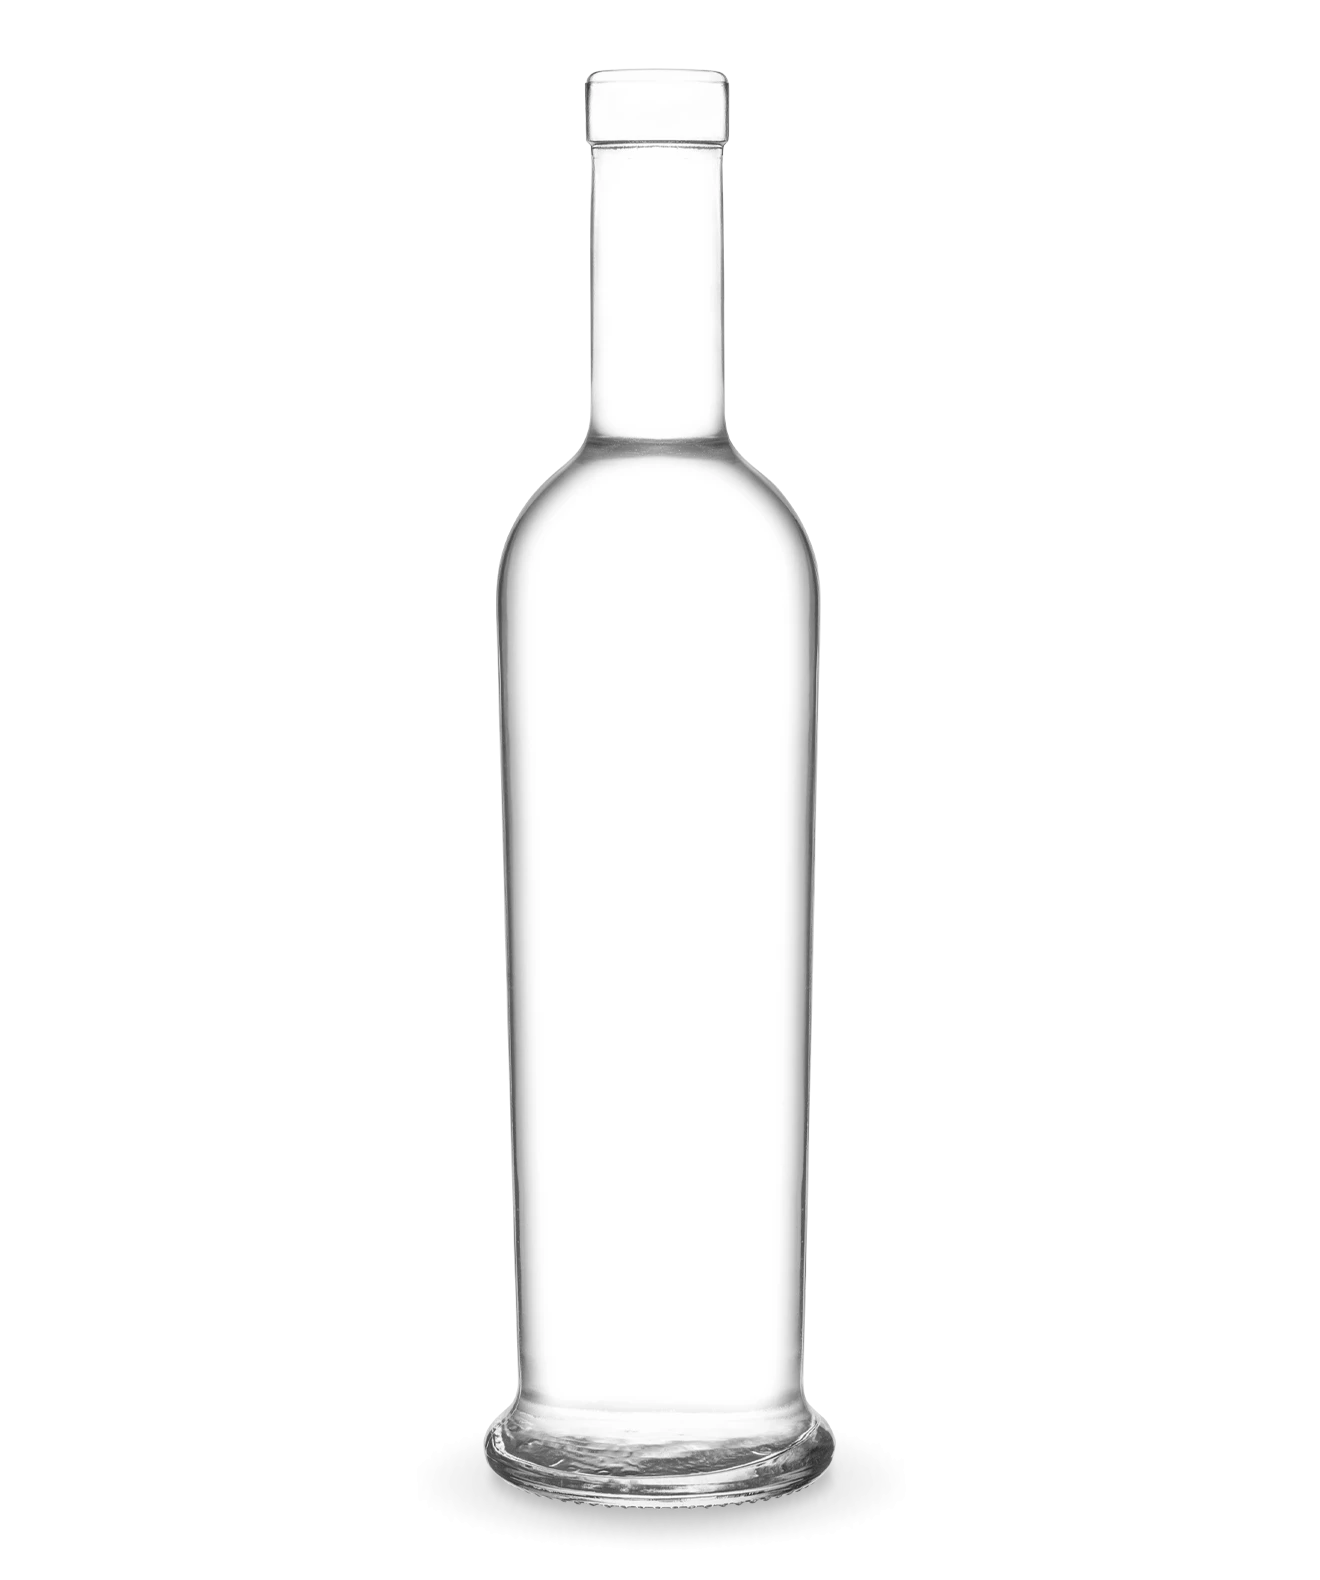 MATISSE Archive Botella para bebidas alcoholicas Vetroelite View 1